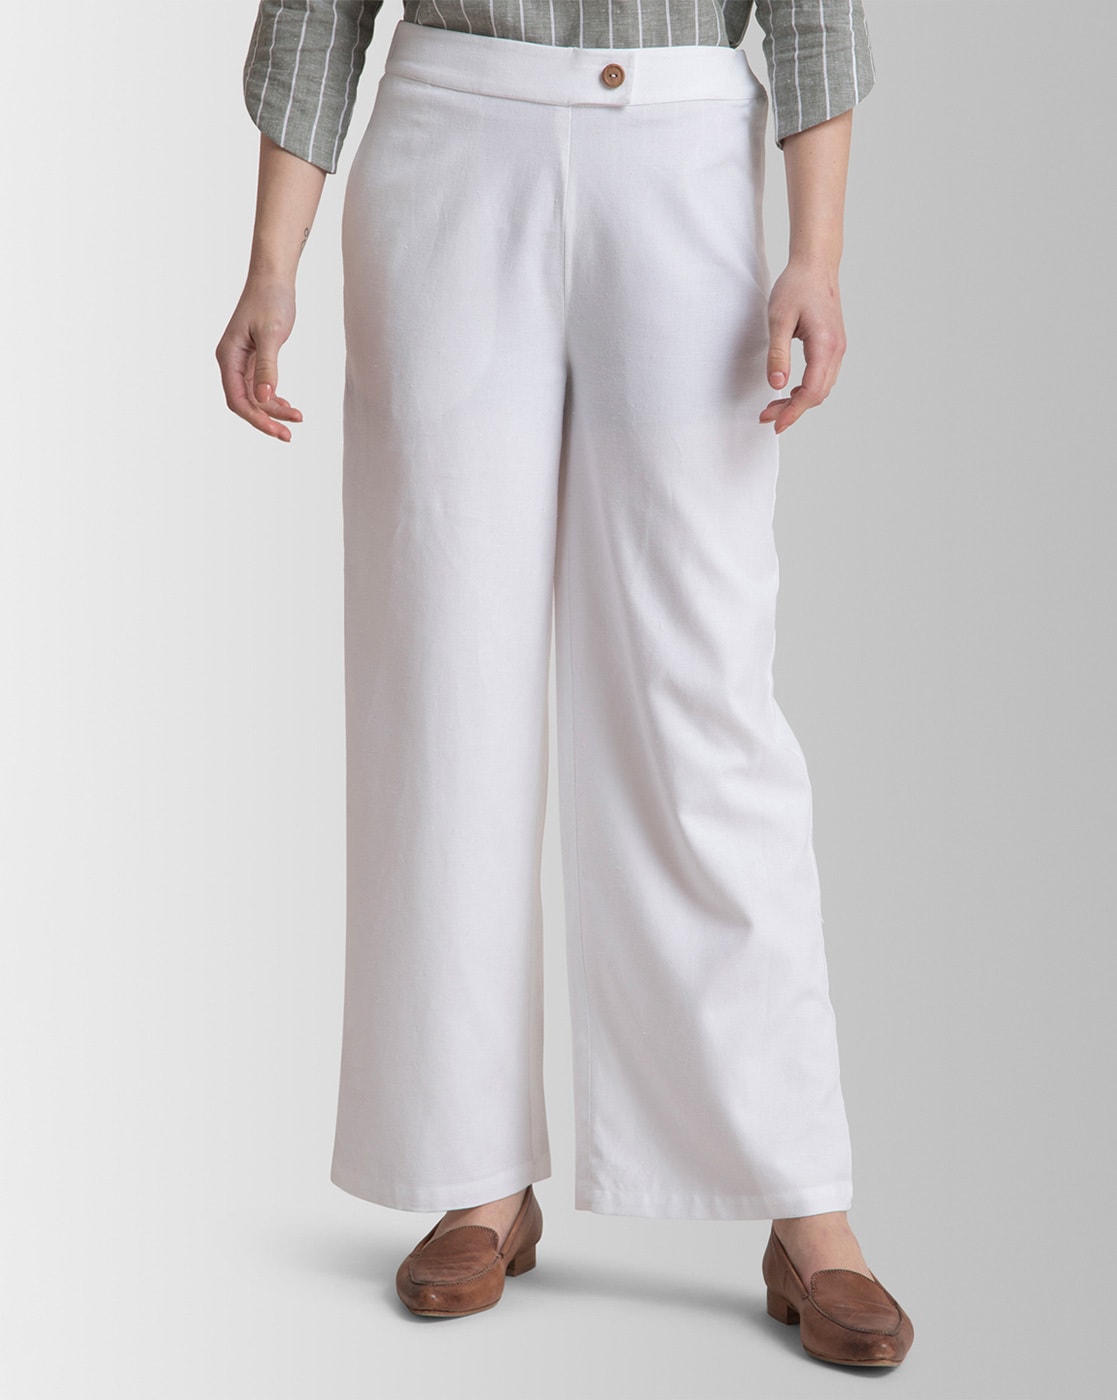 Shop Black Solid Regular Fit Cotton Trousers For Women | सादा /SAADAA-saigonsouth.com.vn